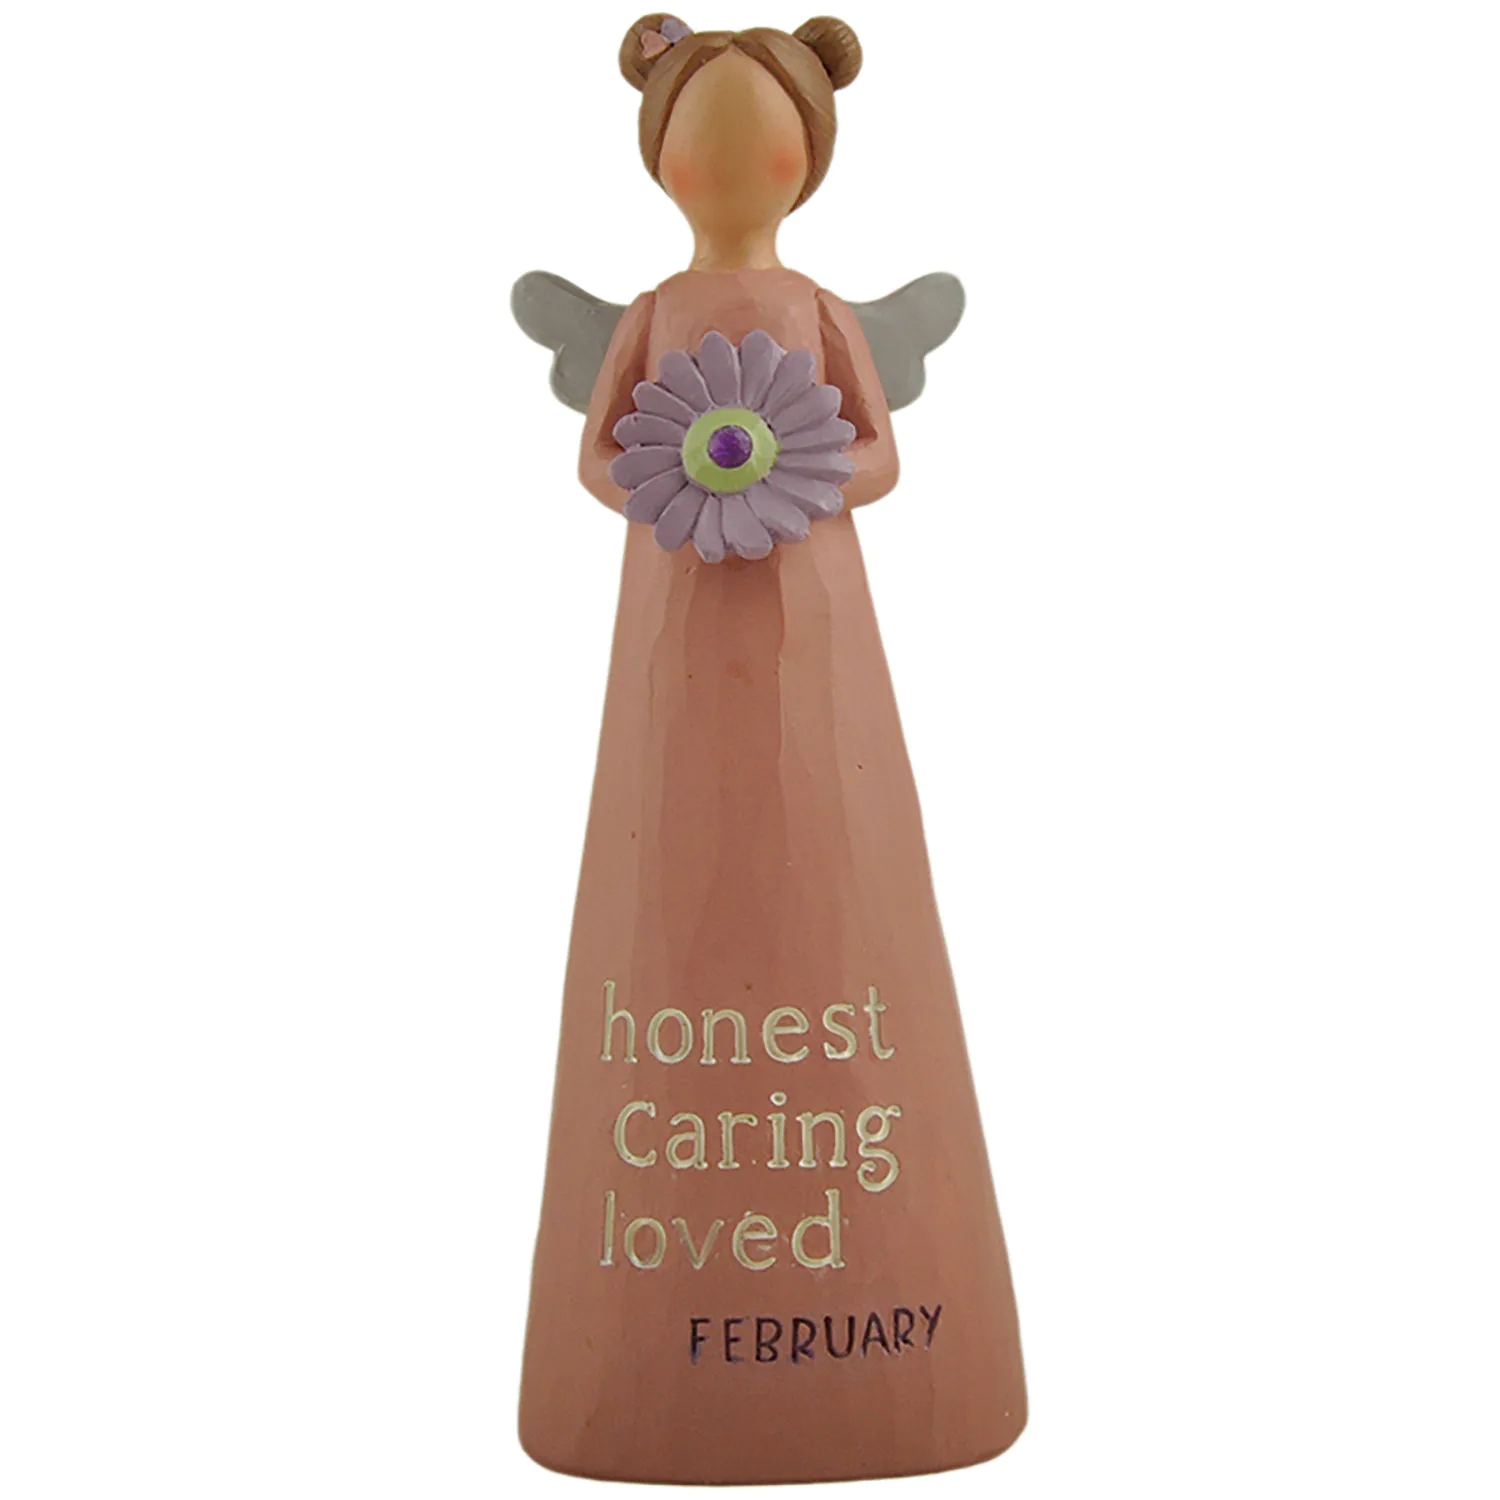 Figurine Handmade Resin Birthstone Crafts February Angel w Purple Flower for Birthdat Gift 231-13599